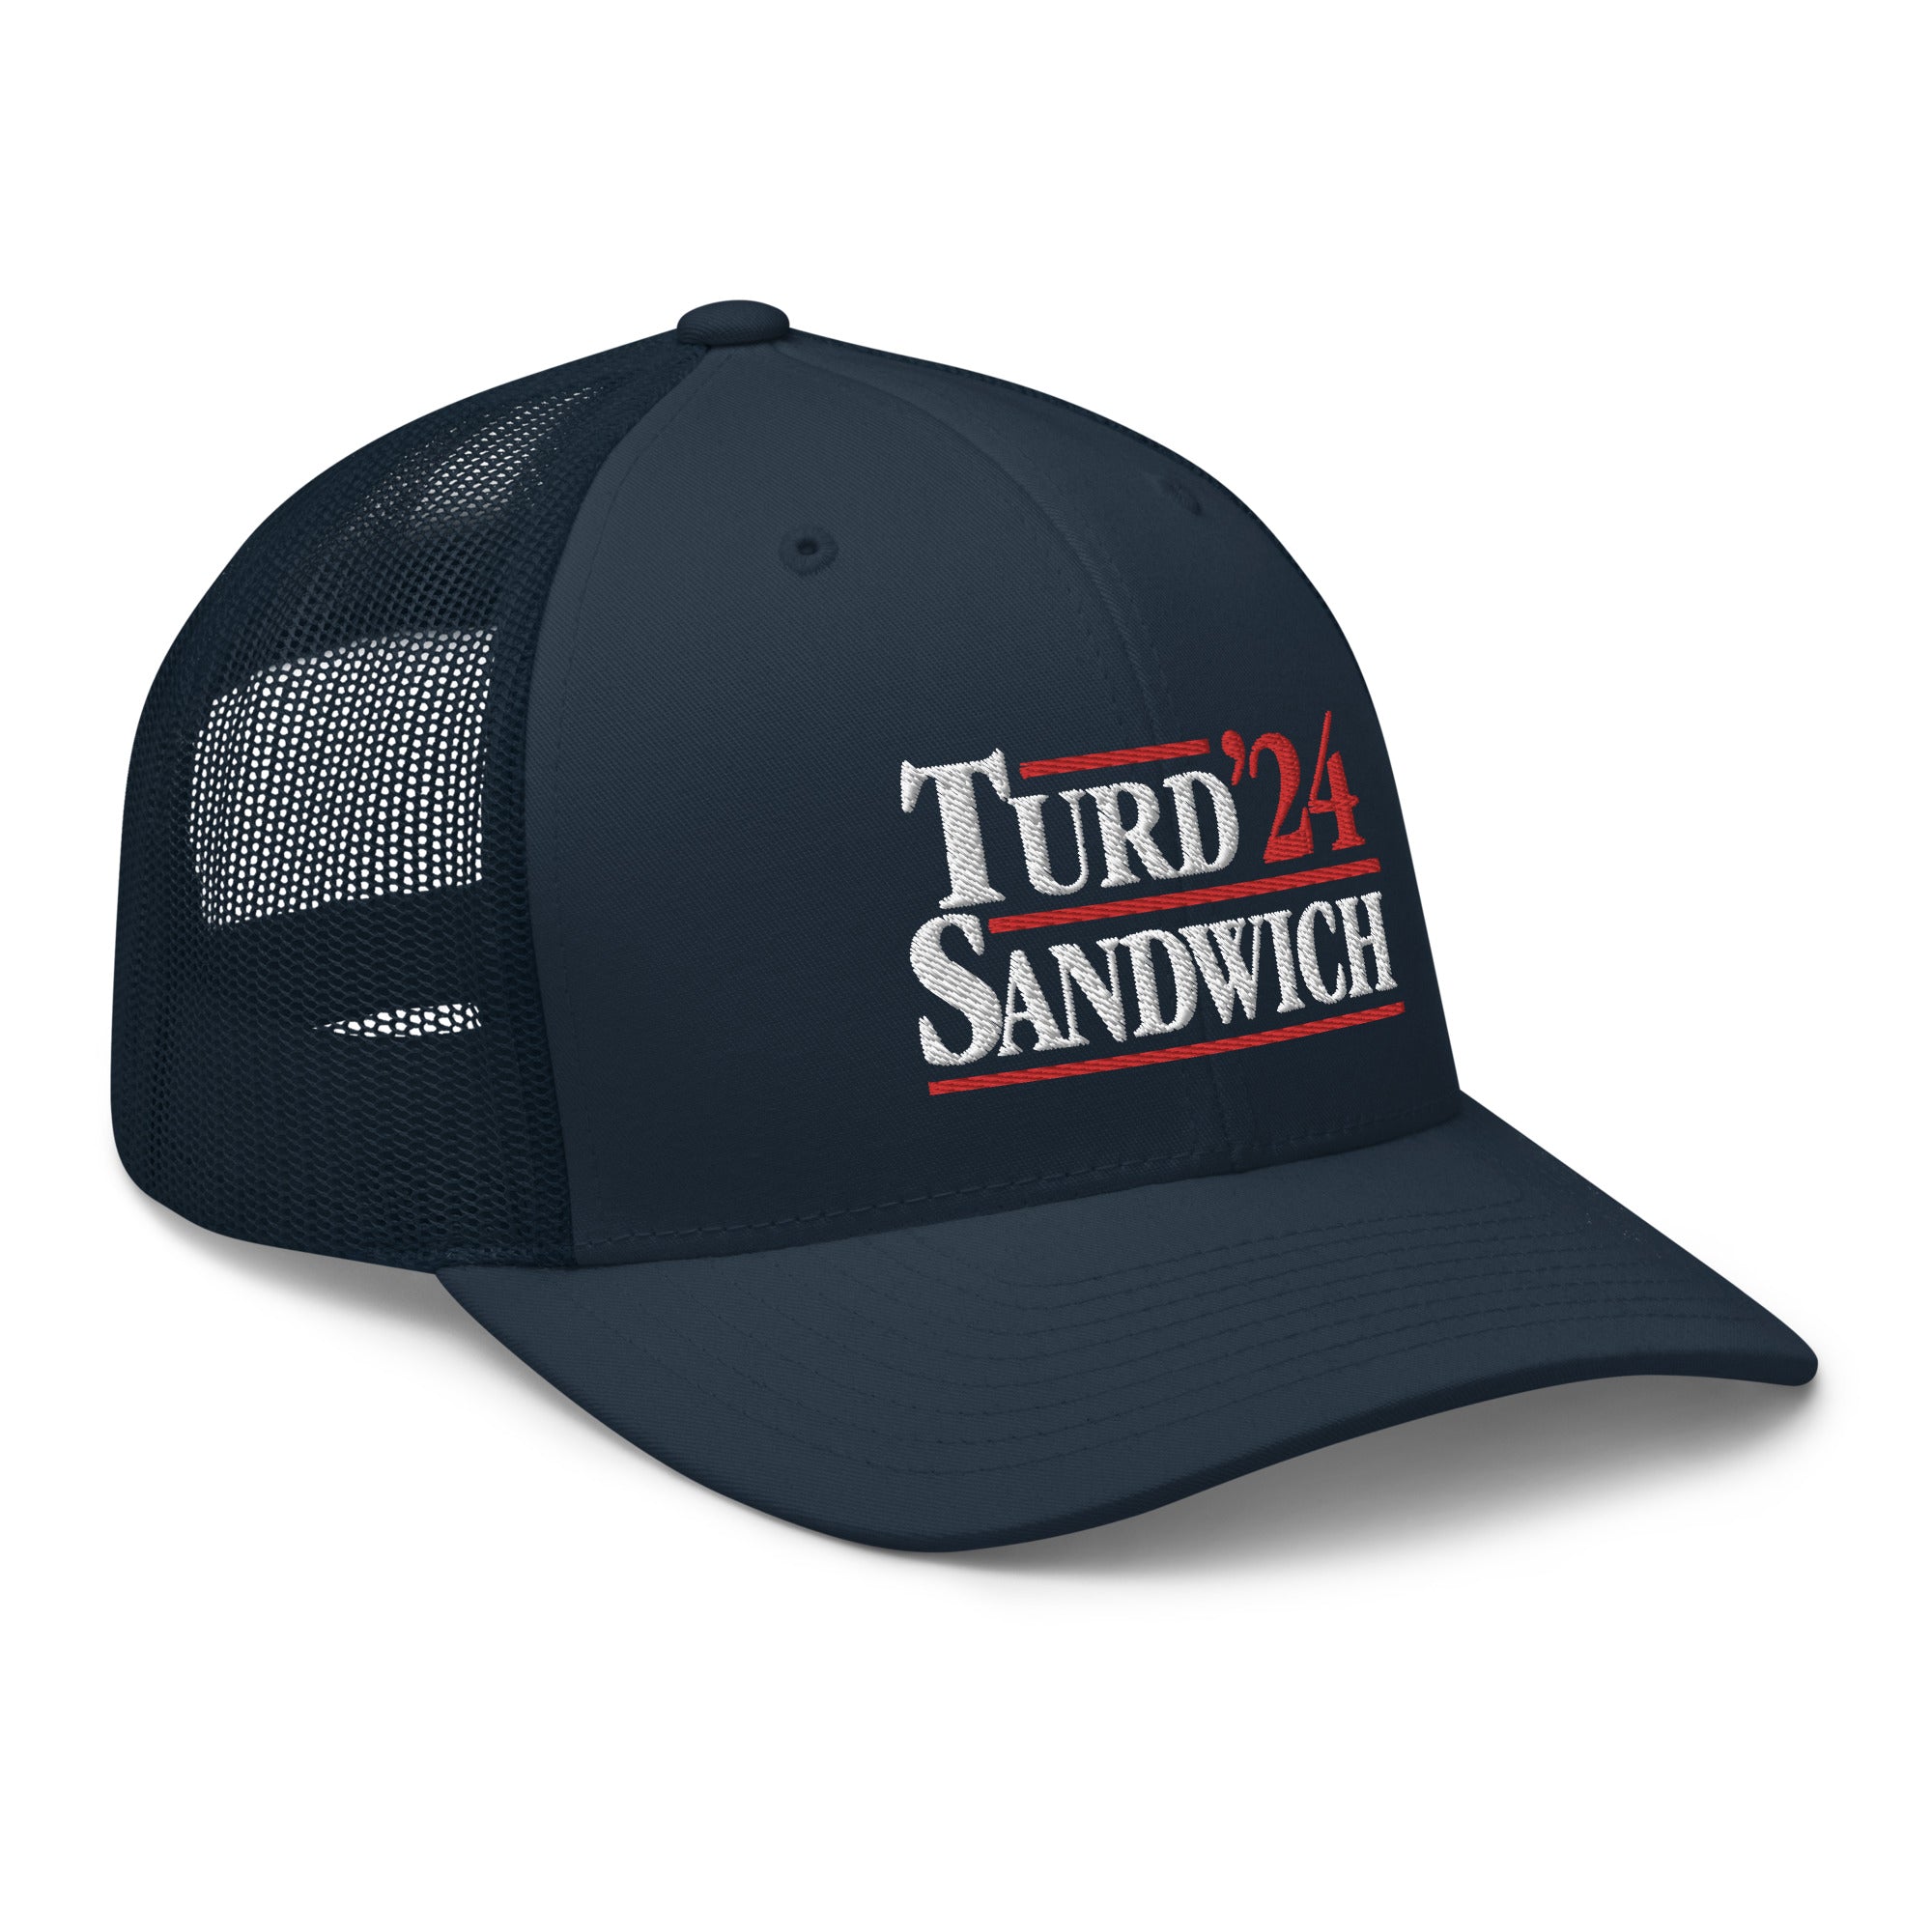 Giant Douche and Turd Sandwich 2024 Trucker Caps